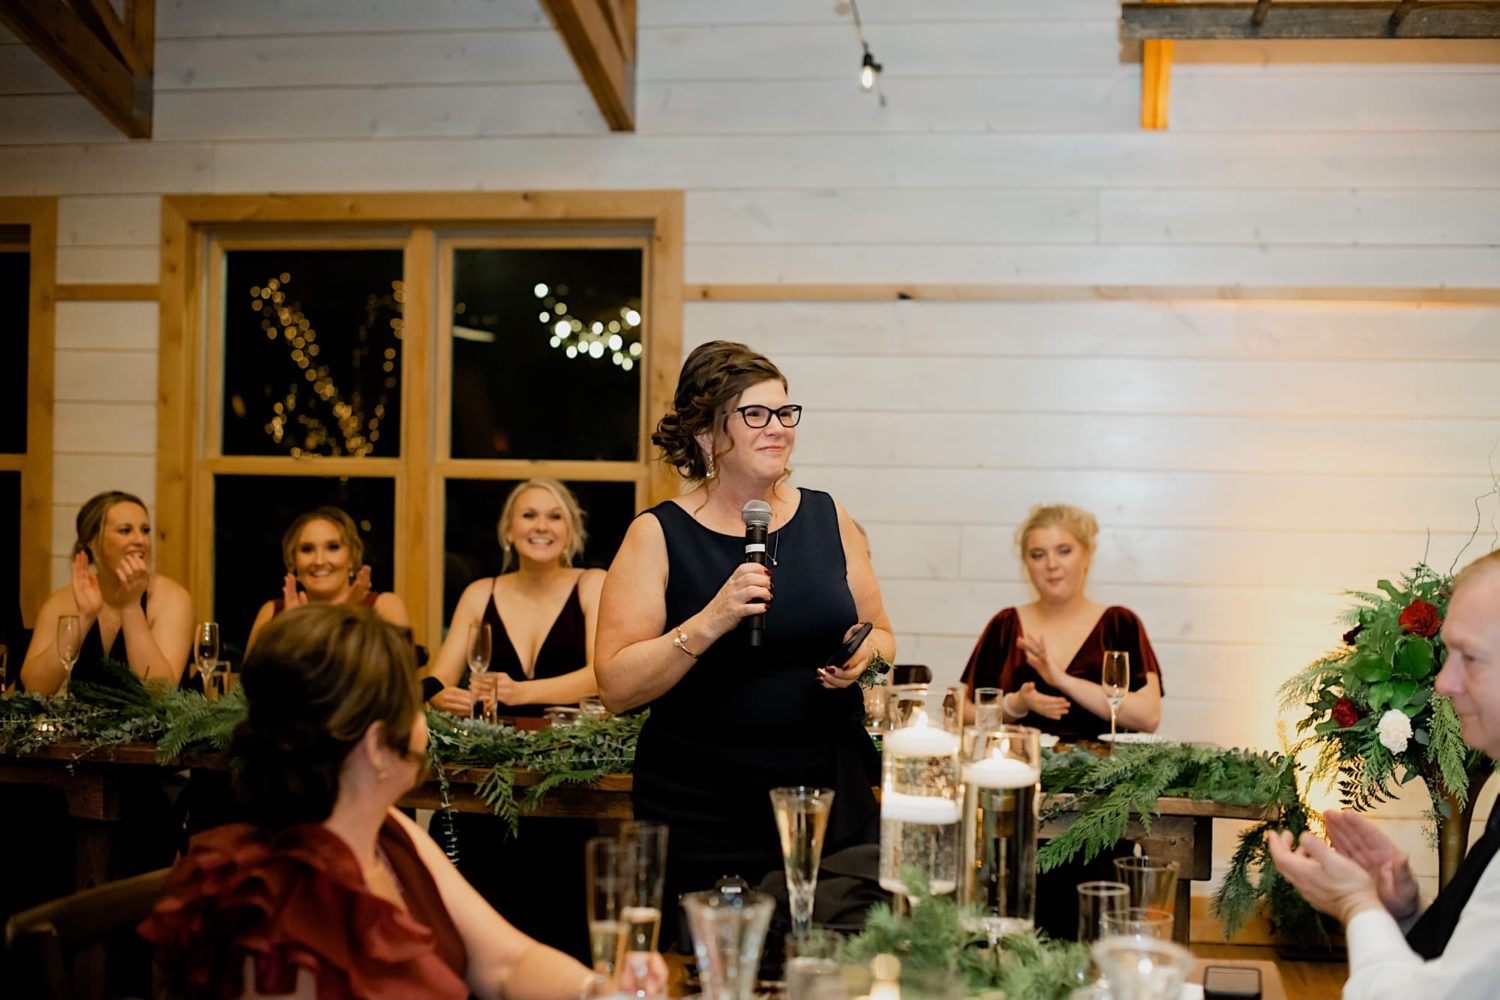 wediding toasts at vennebu hill rustic barn wedding reception